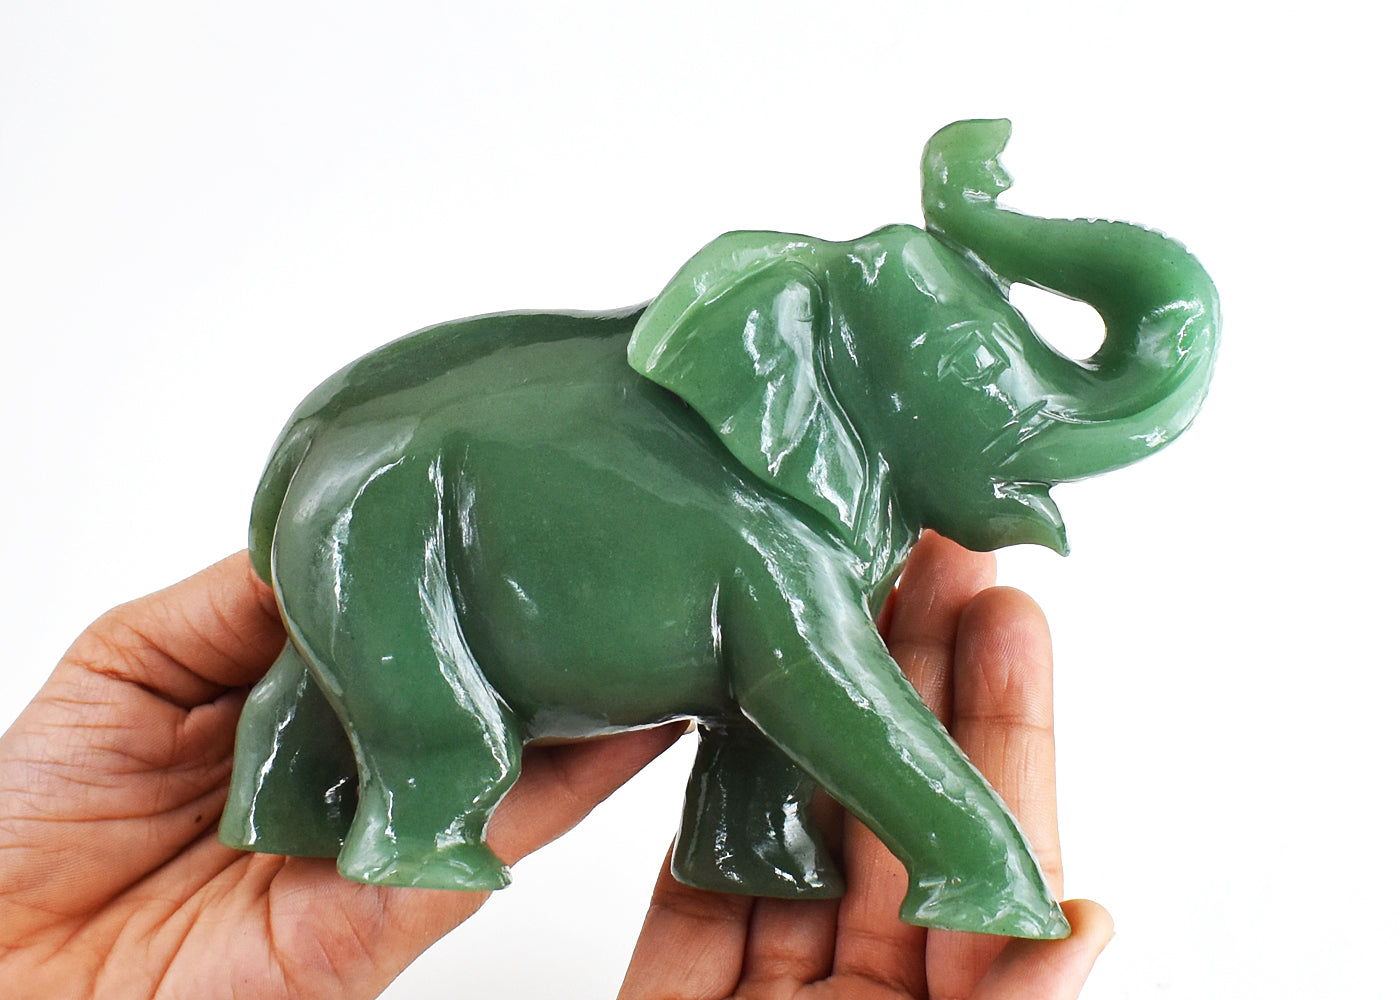 4027.00 Carats Genuine Green Aventurine Hand Carved Crystal Gemstone Carving Elephant